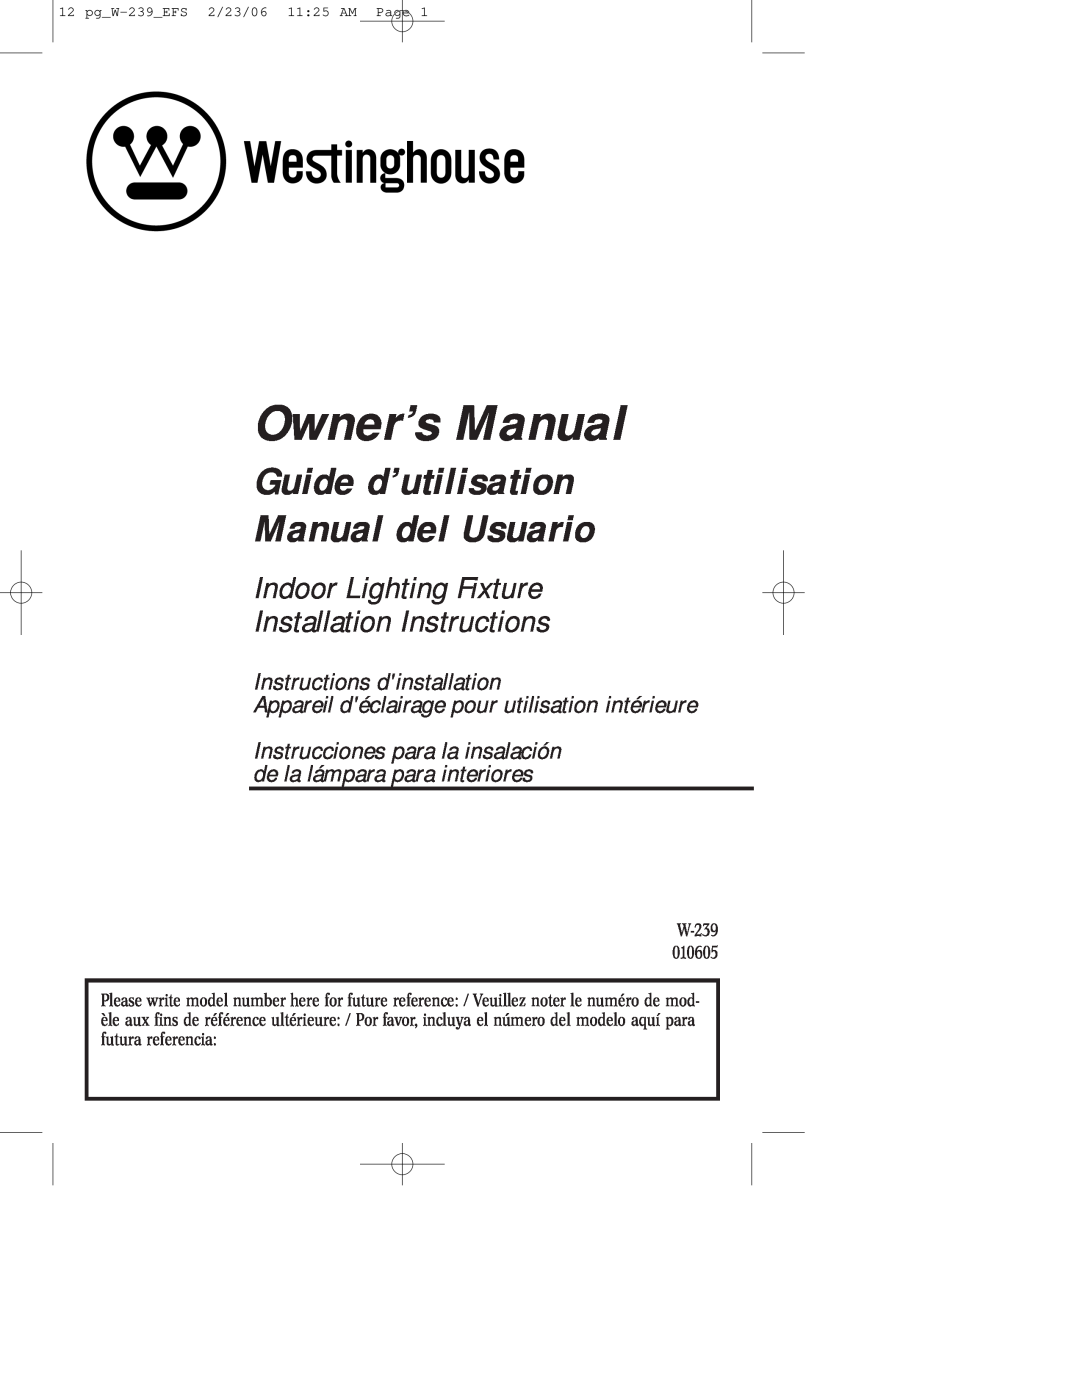 Westinghouse W-239 owner manual Guide d’utilisation Manual del Usuario, Indoor Lighting Fixture Installation Instructions 